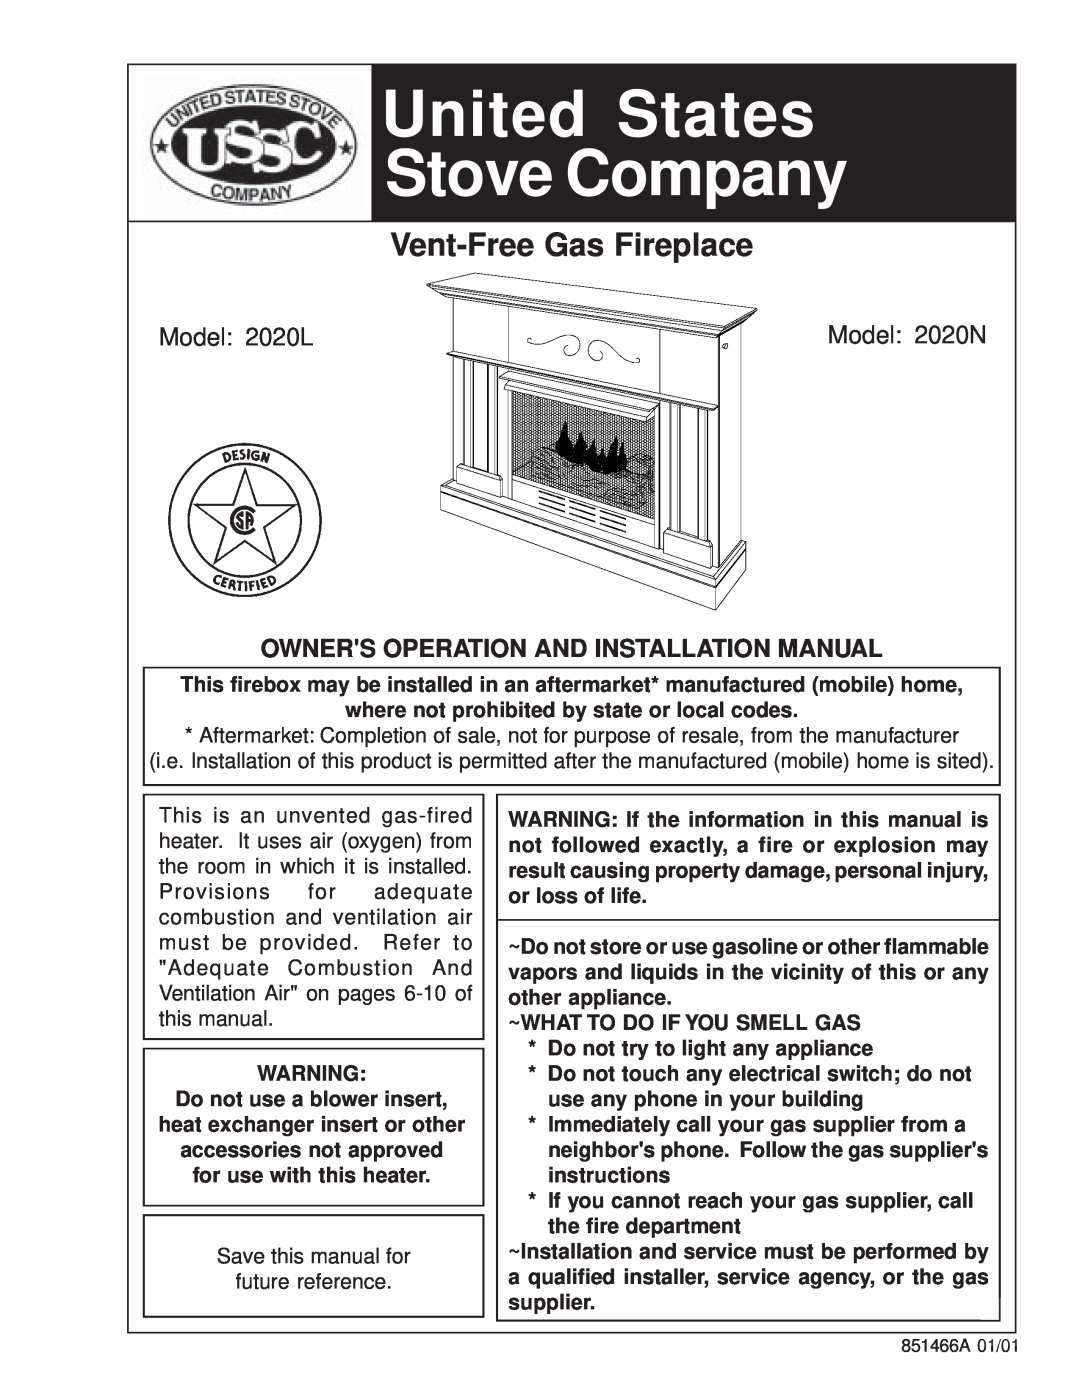 United States Stove installation manual Model 2020L, Model 2020N, Owners Operation And Installation Manual 